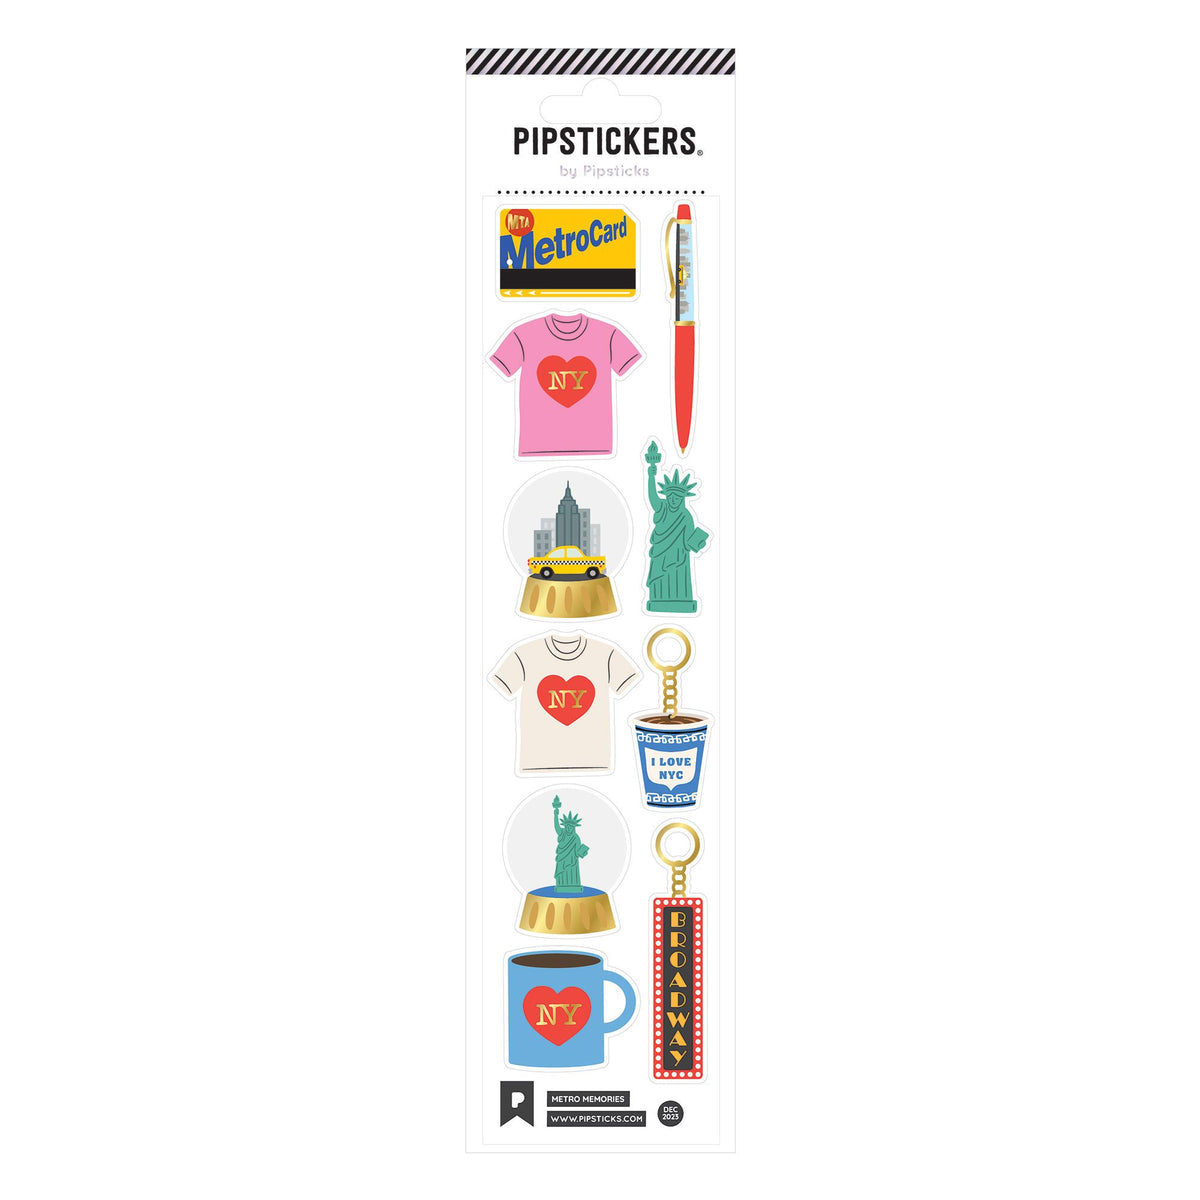 Pipstickers Stickers for Kids – New York Metro Memories